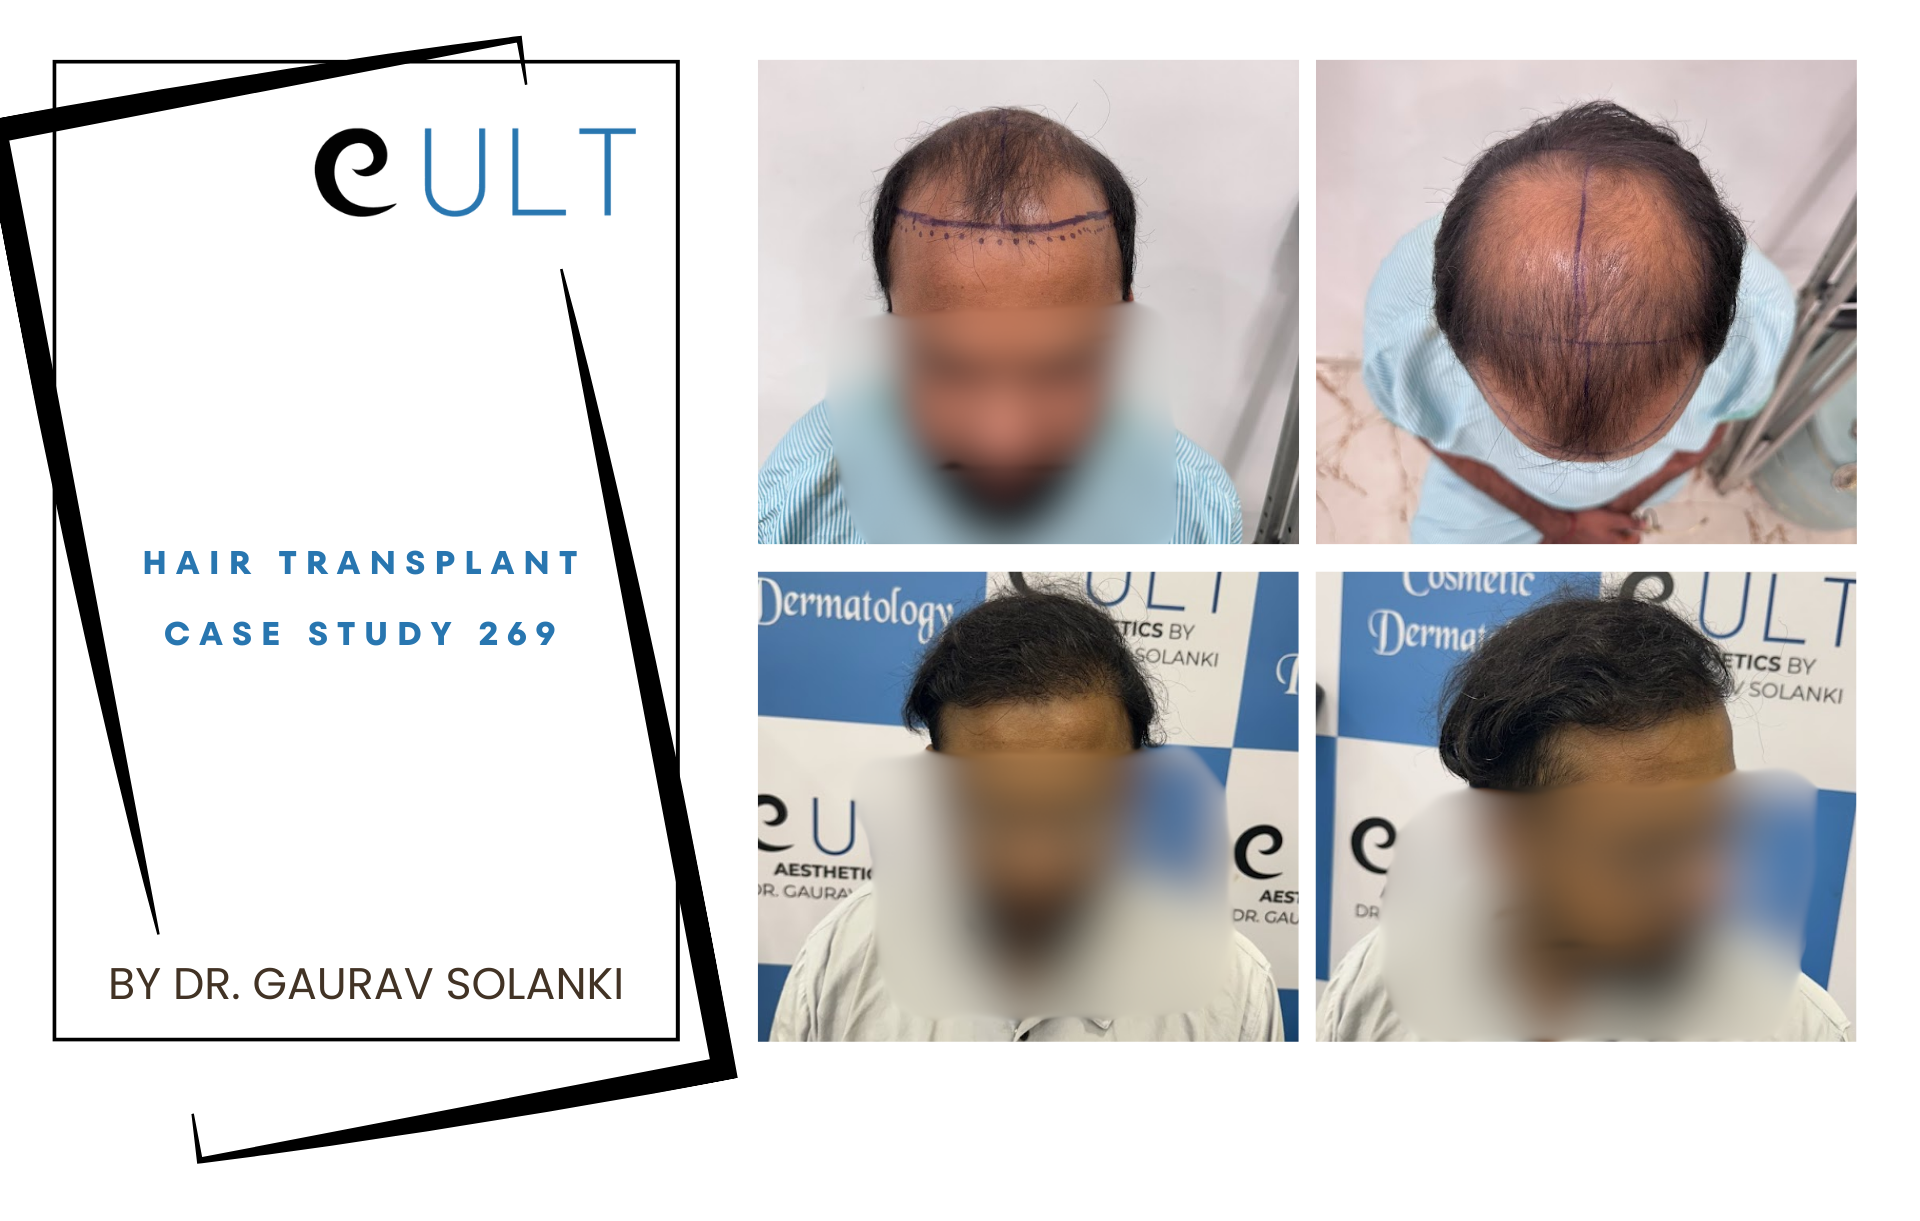 Hair Transplant case 269